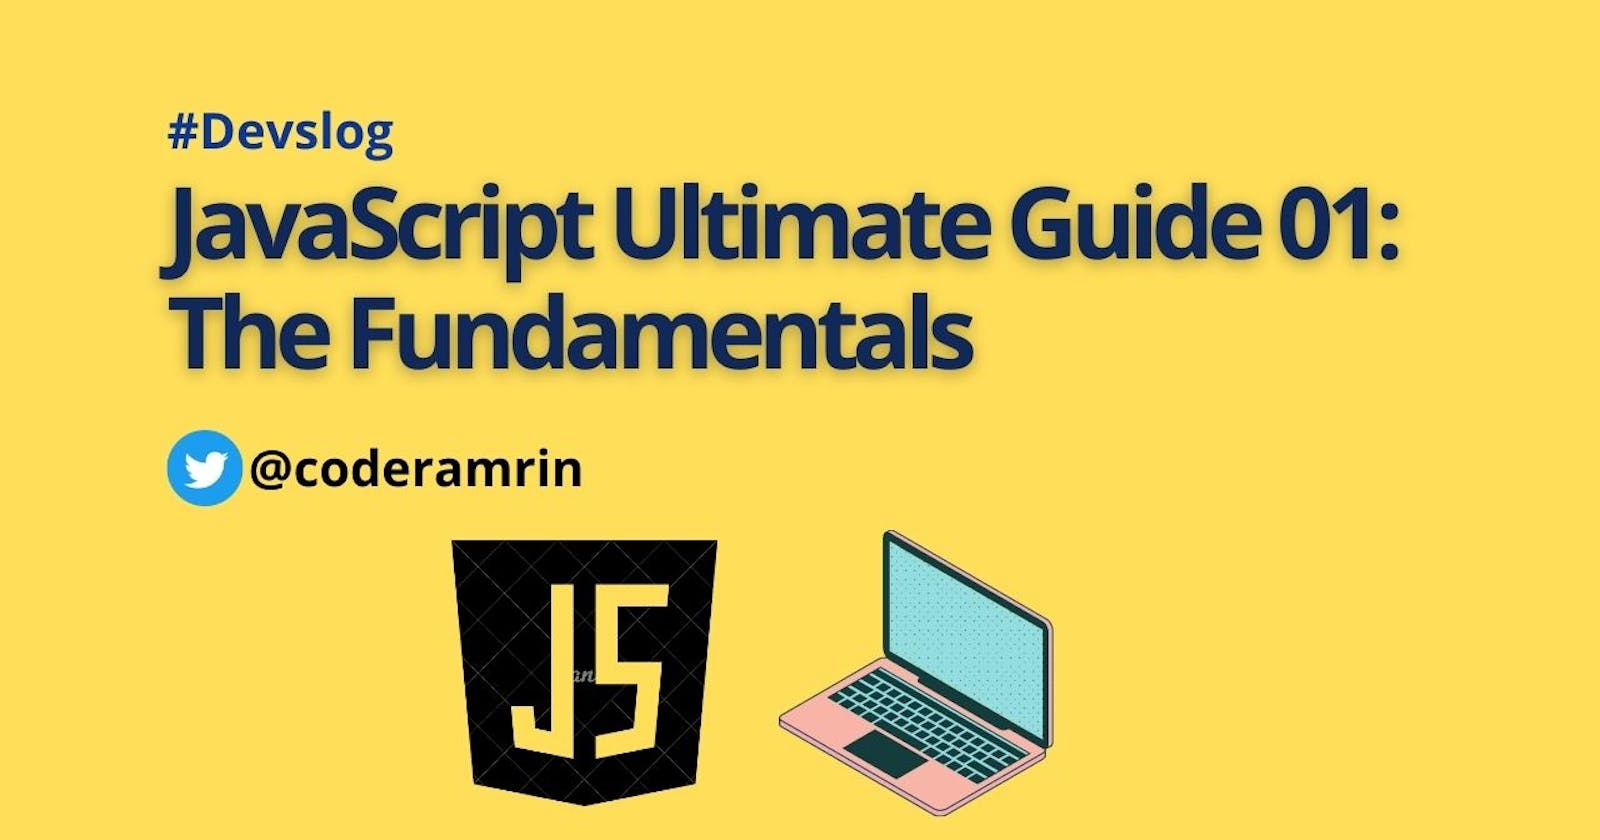 JavaScript Ultimate Guide 01: The fundamentals.